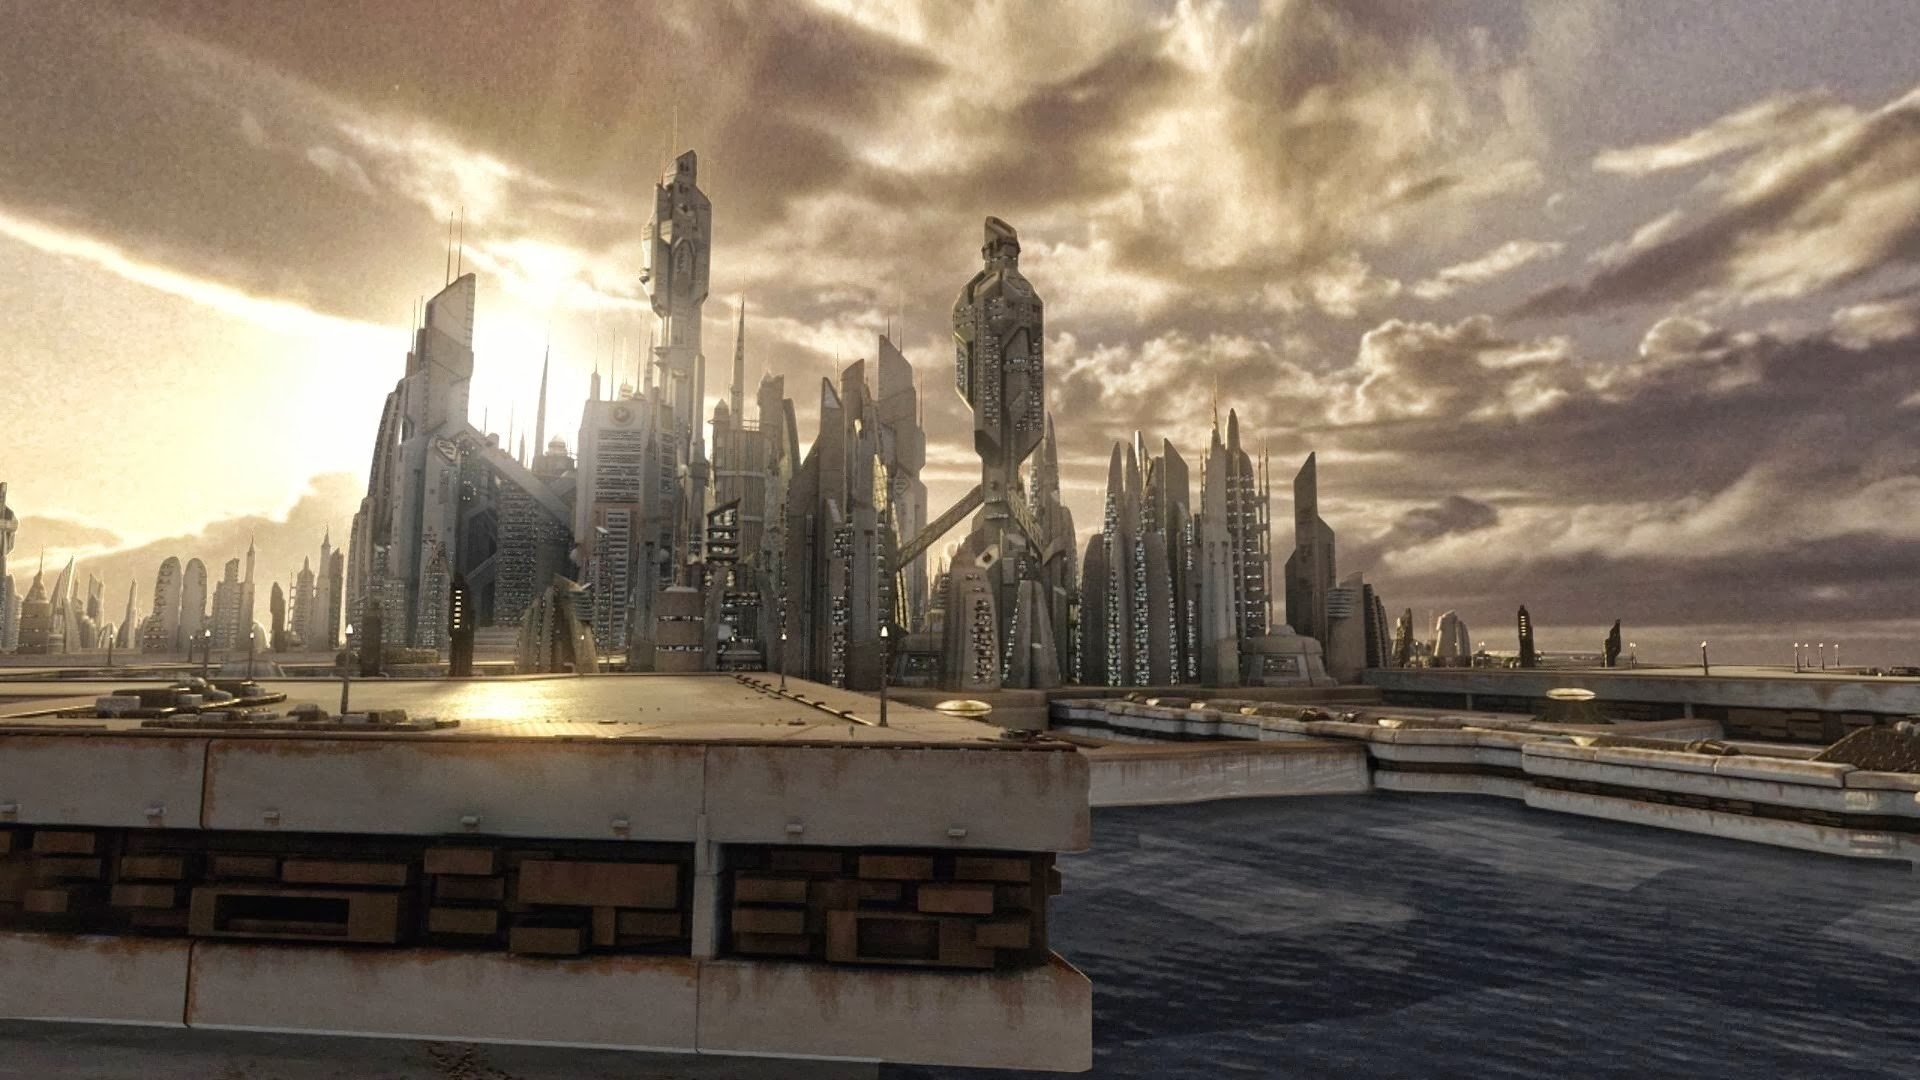 General 1920x1080 Stargate Atlantis futuristic city digital art TV series science fiction